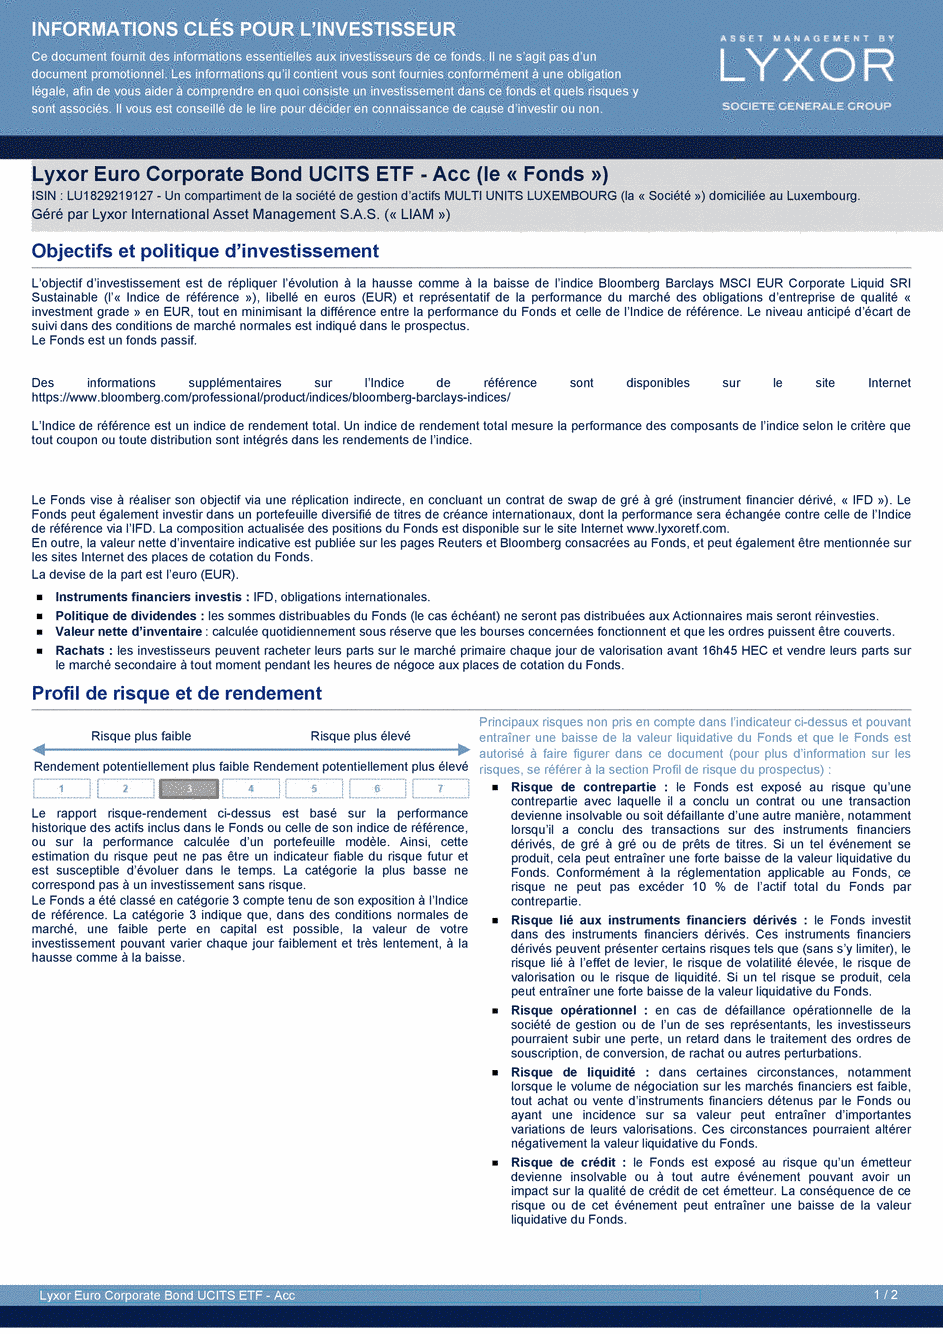 DICI Lyxor ESG Euro Corporate Bond (DR) UCITS ETF - Acc - 26/08/2019 - Français